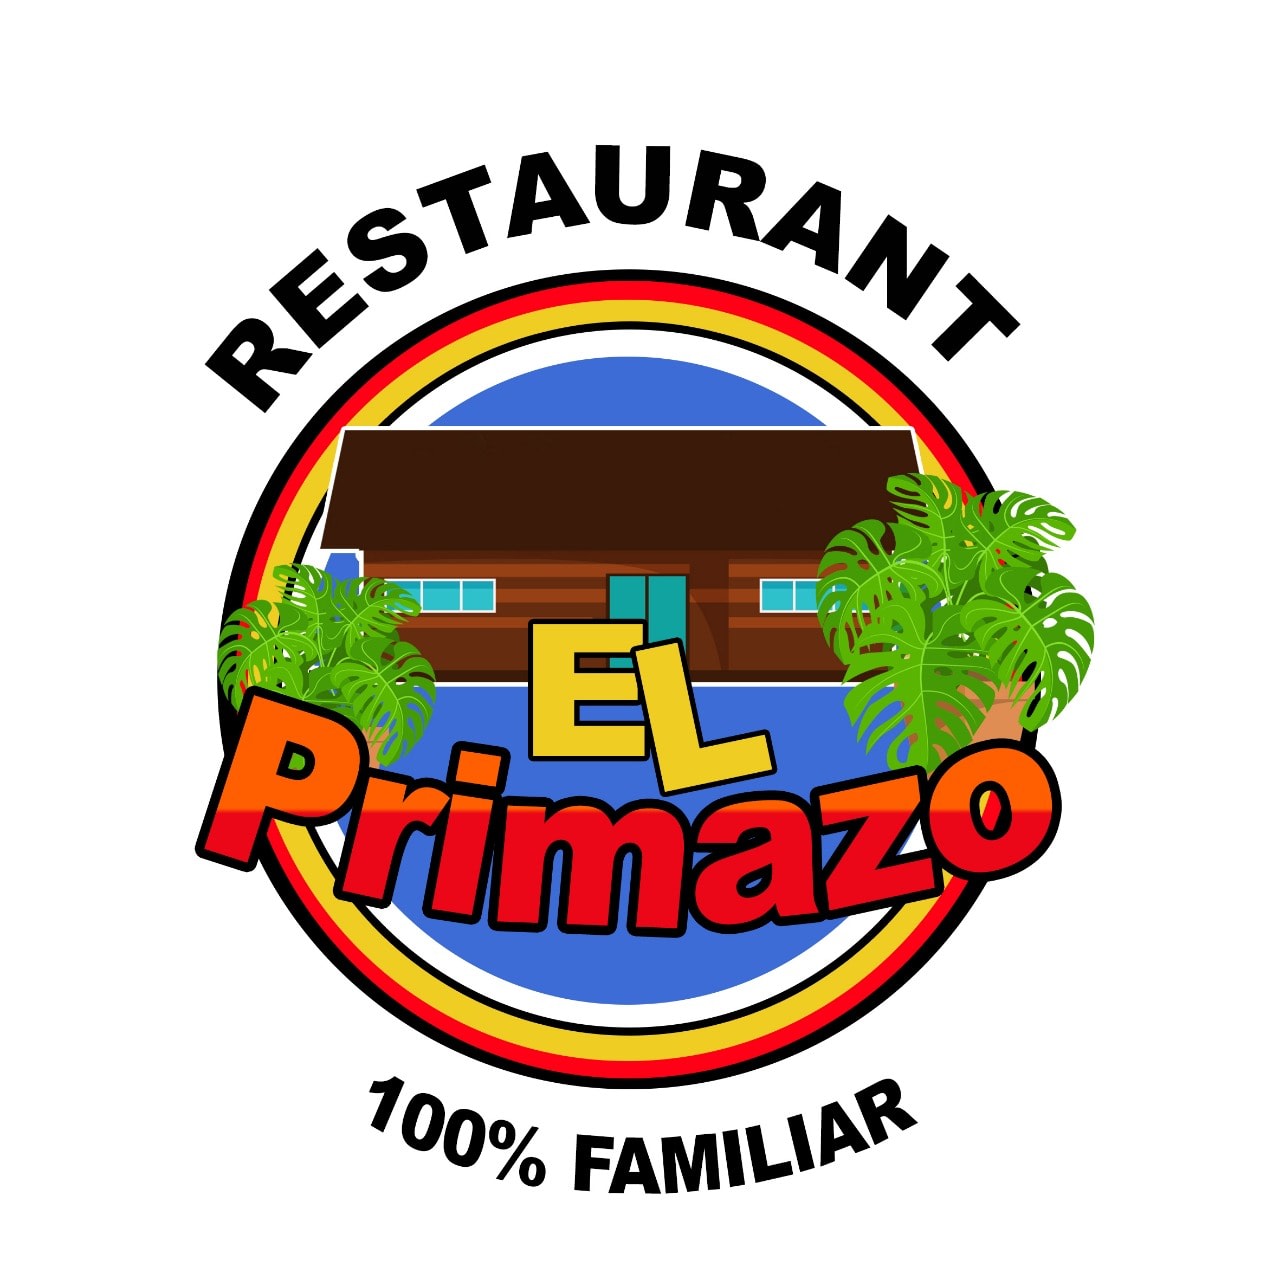 Restaurant "El Primazo"